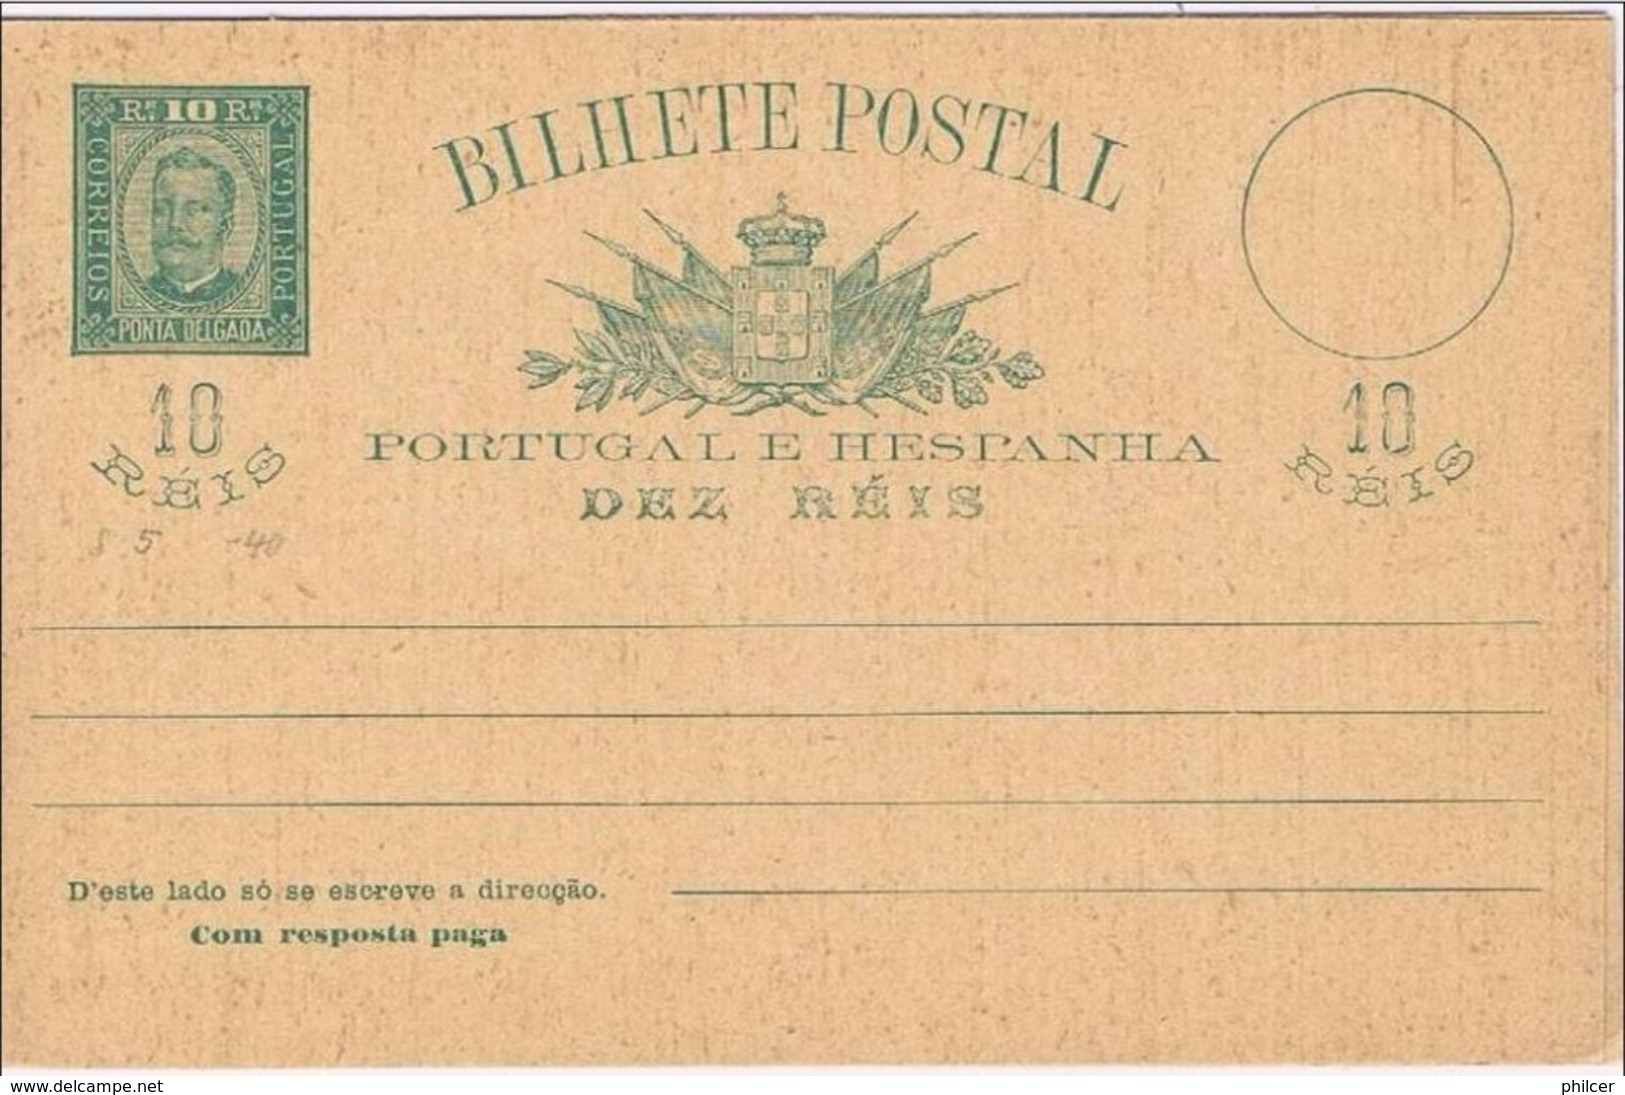 Portugal, Ponta Delgada, Bilhete Postal, 10 Reis - Ponta Delgada